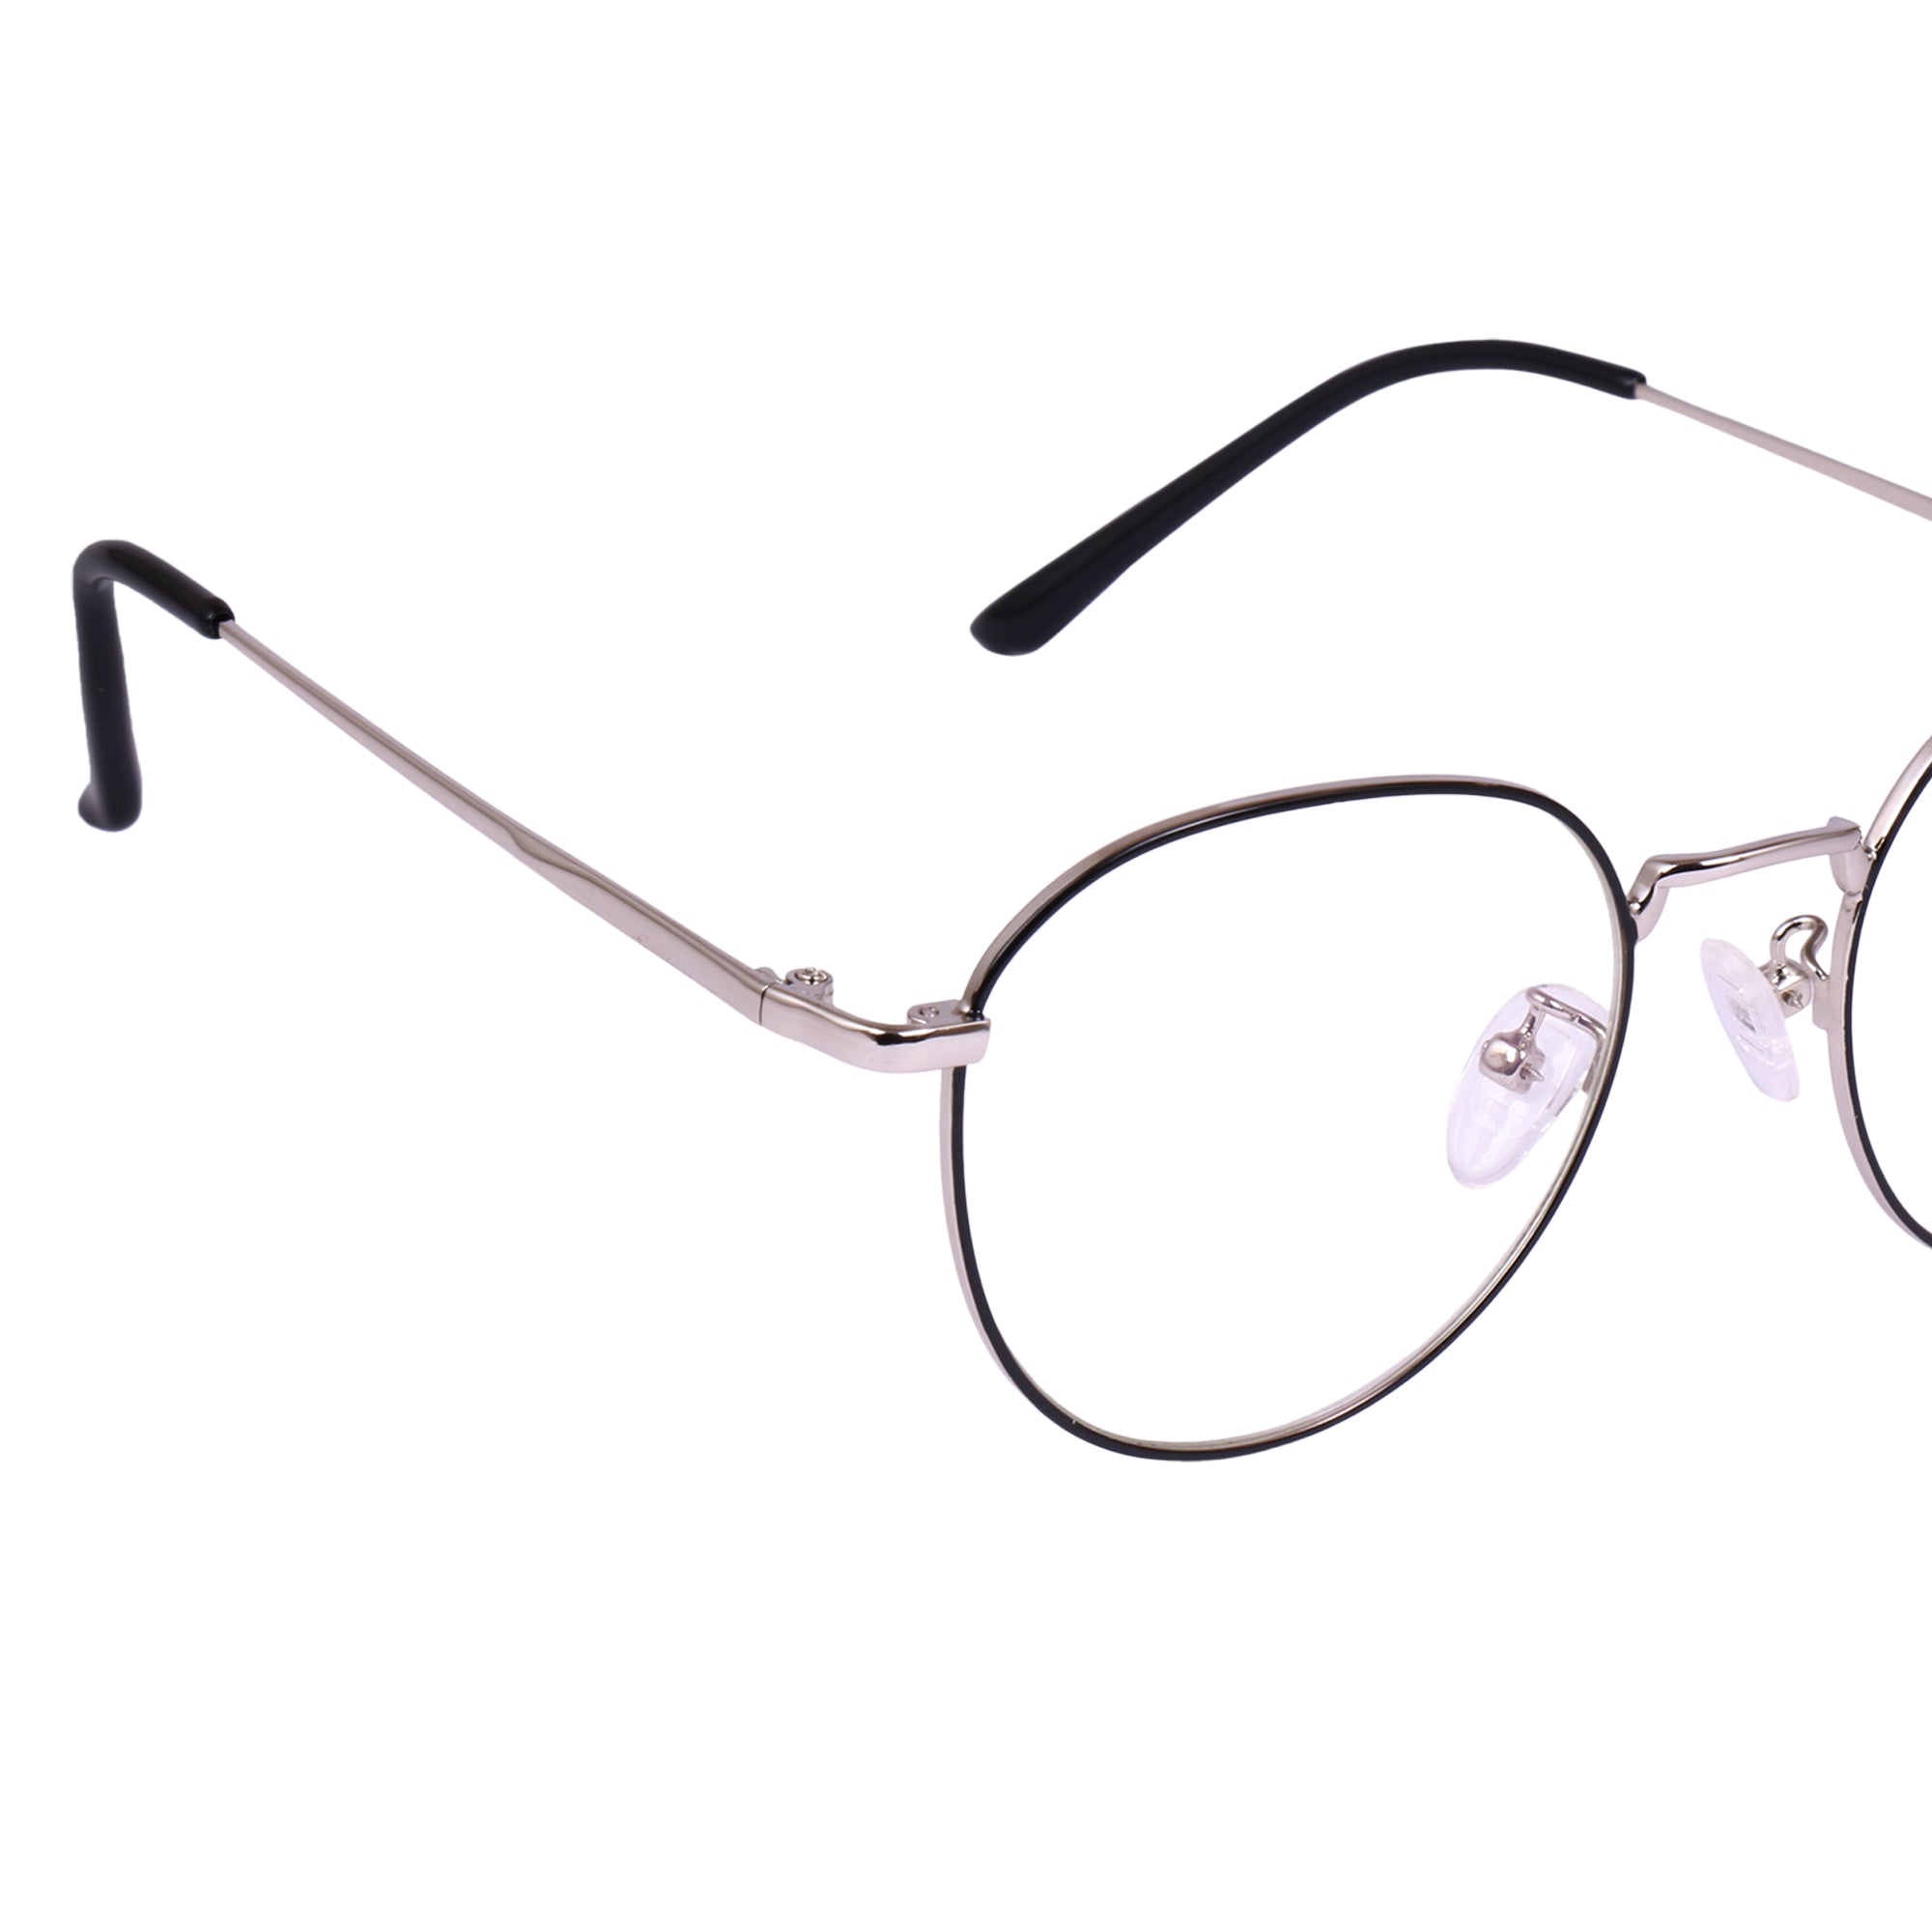 Black & Silver Round Metal Eyeglasses - L3142